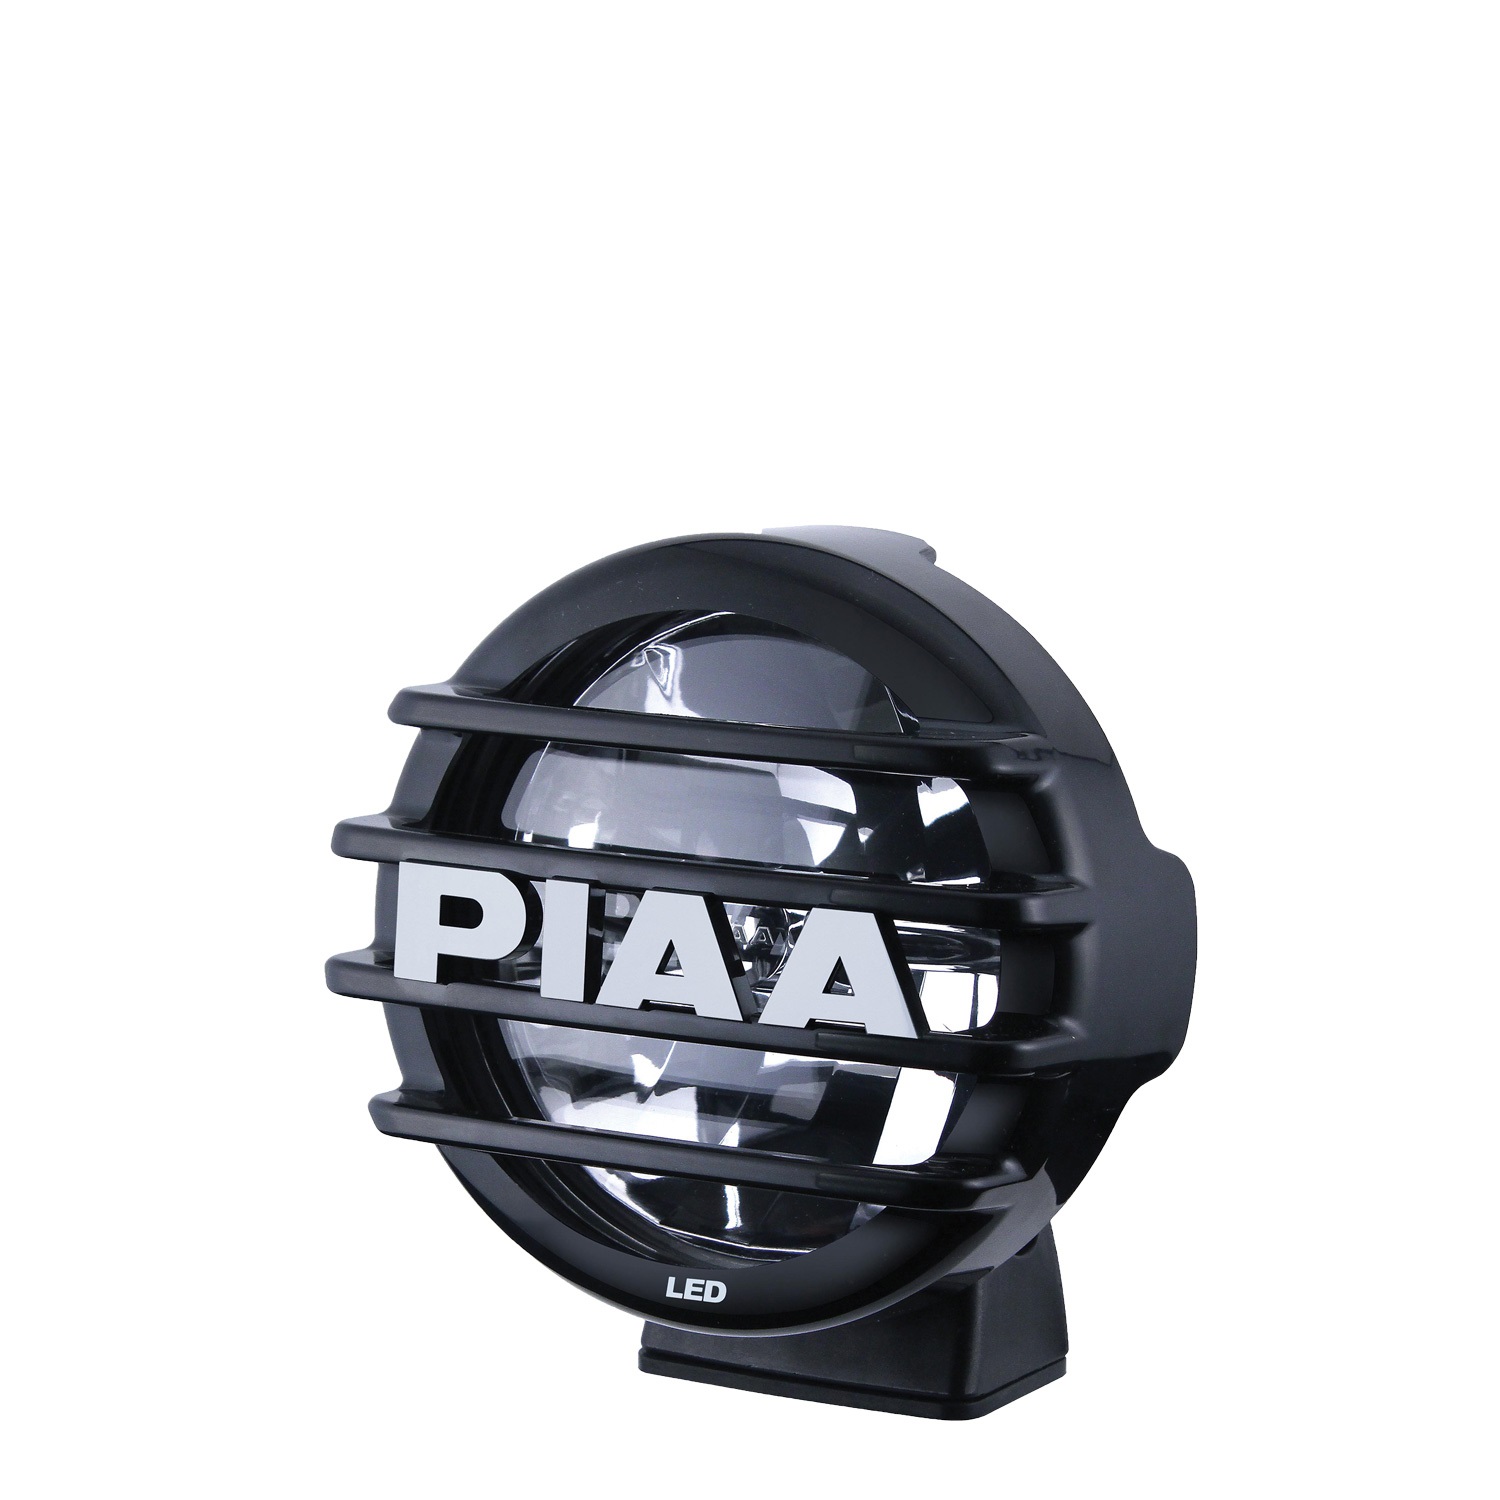 PIAA PIAA 05362 LED Driving Lamp Kit Fits 14 Tundra